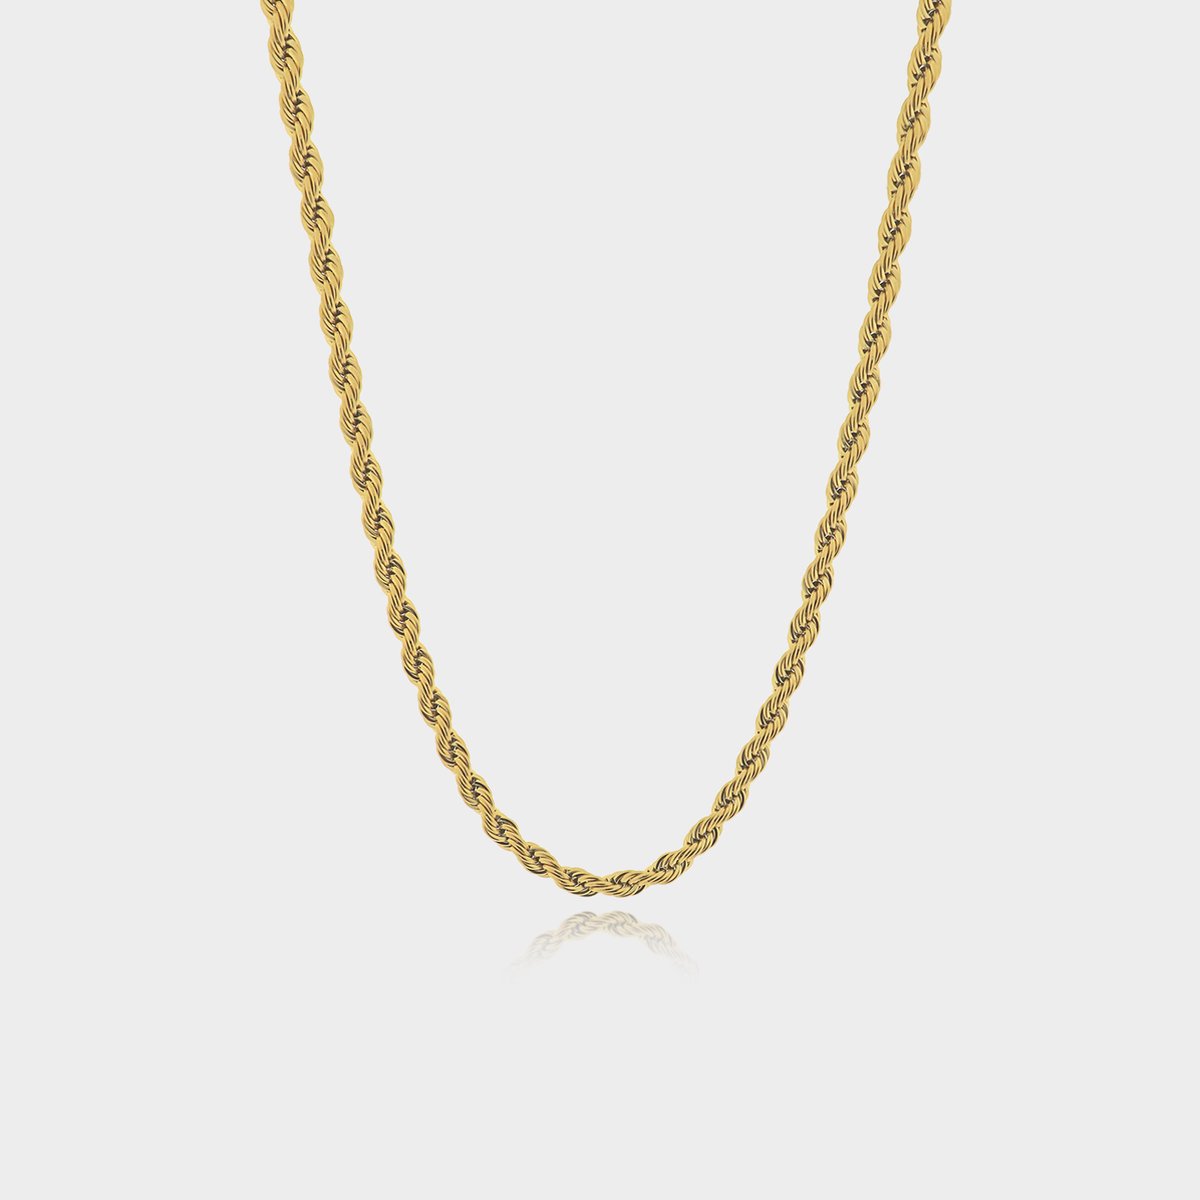 Rope Ketting 5 mm - Gouden Schakelketting - 60 cm lang - Ketting Heren - Olympus Jewelry